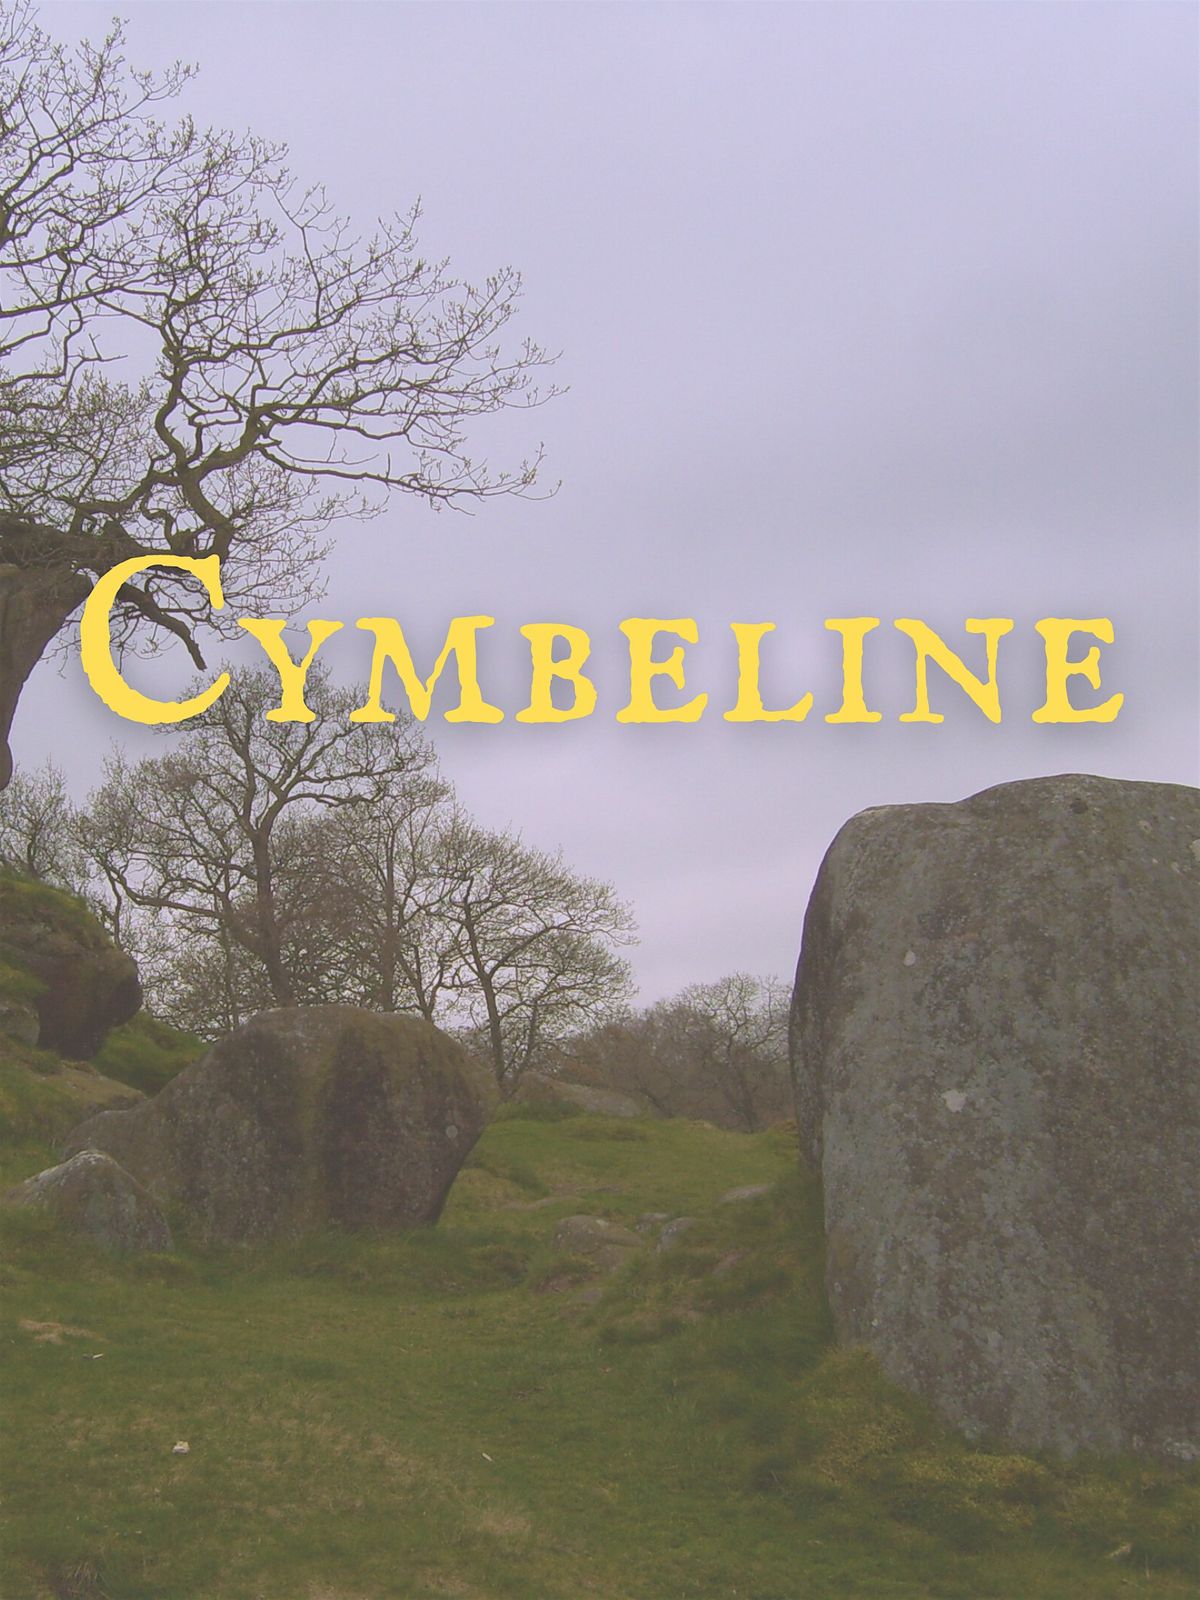 Berkeley Shakespeare Company Presents: Cymbeline